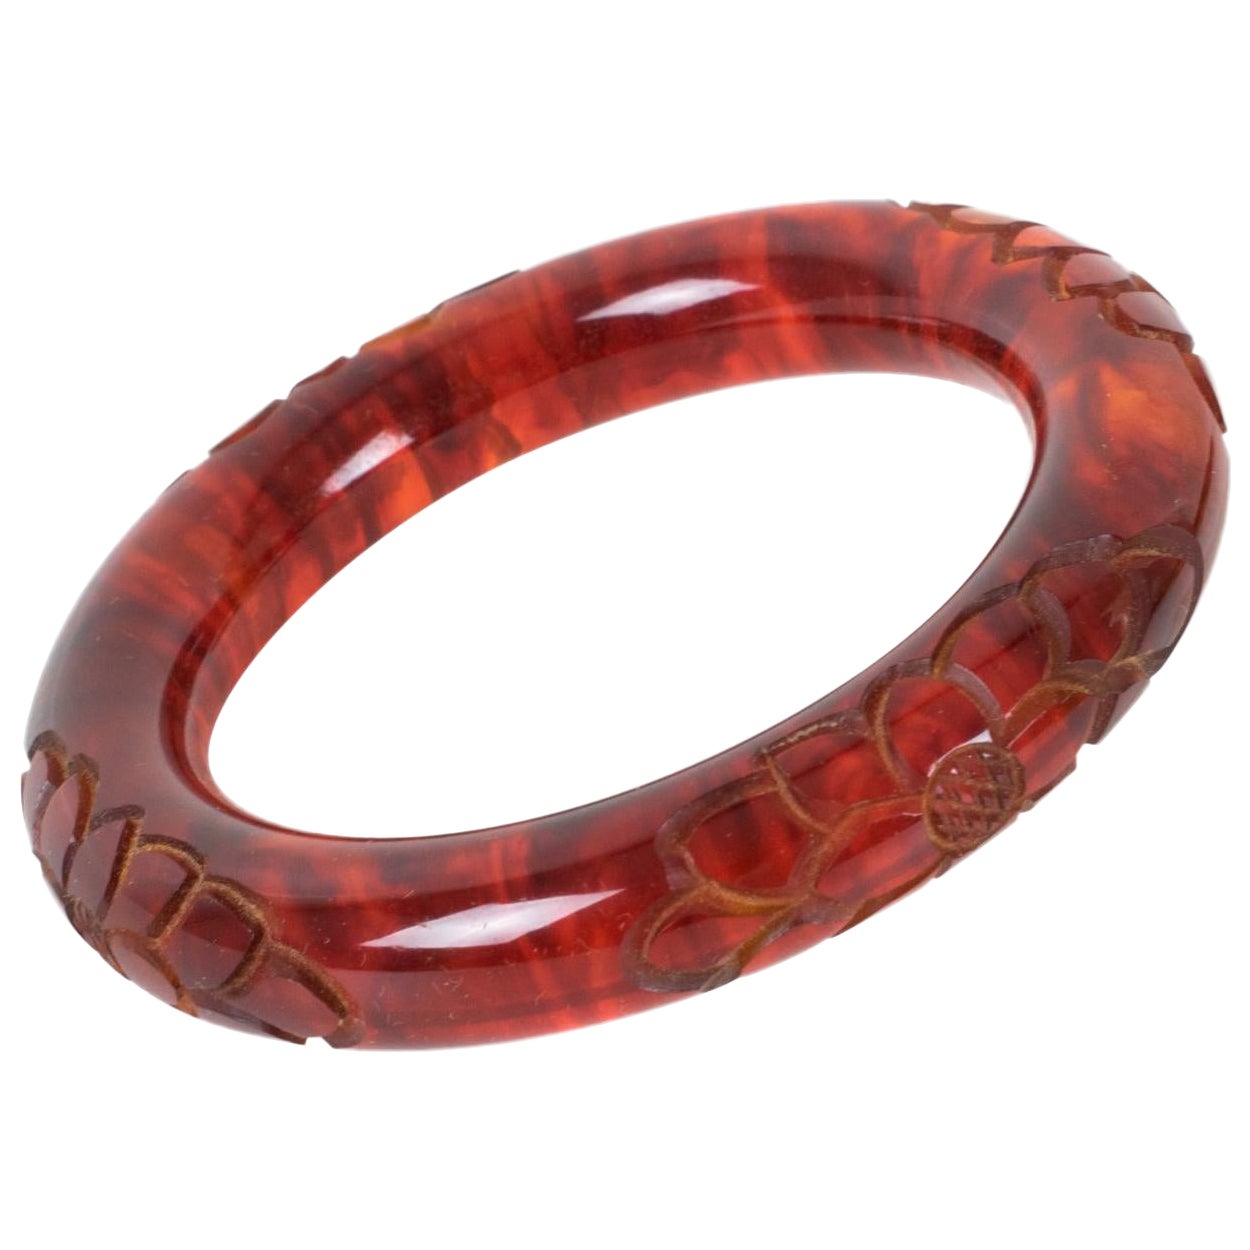 Bakelite Carved Bracelet Bangle in Cloudy Red Tea Amber Color